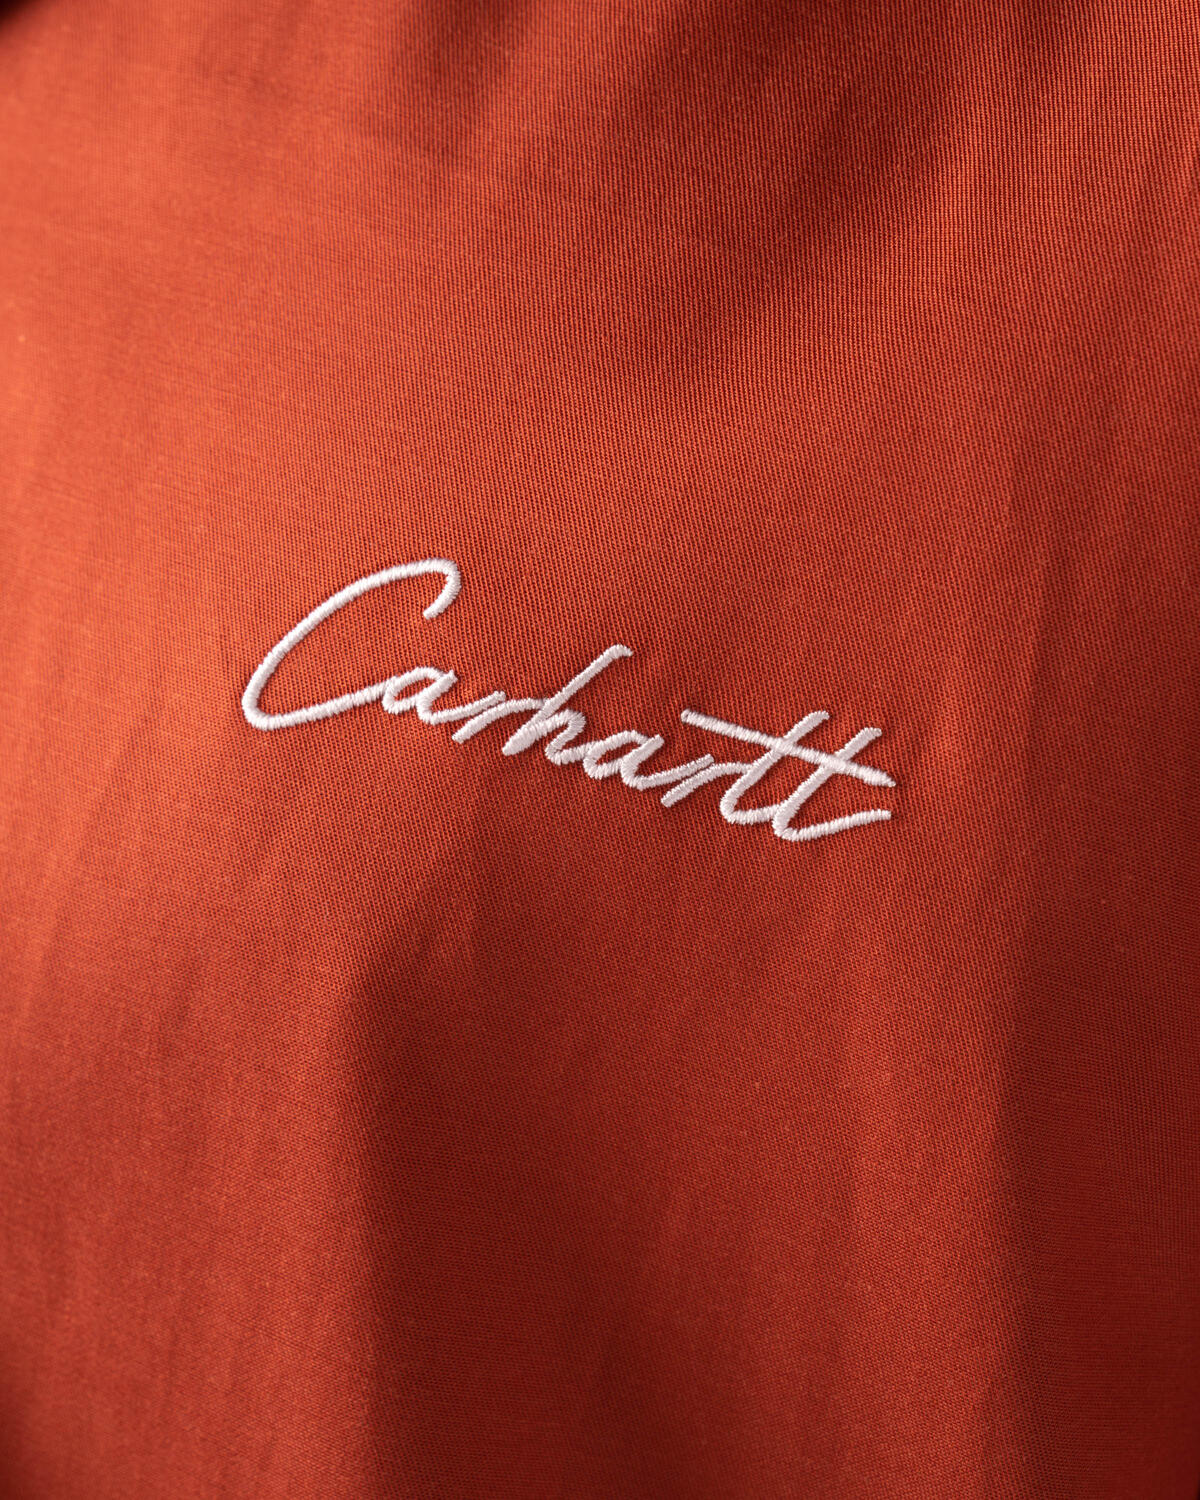 Carhartt WIP S/S Delray Shirt